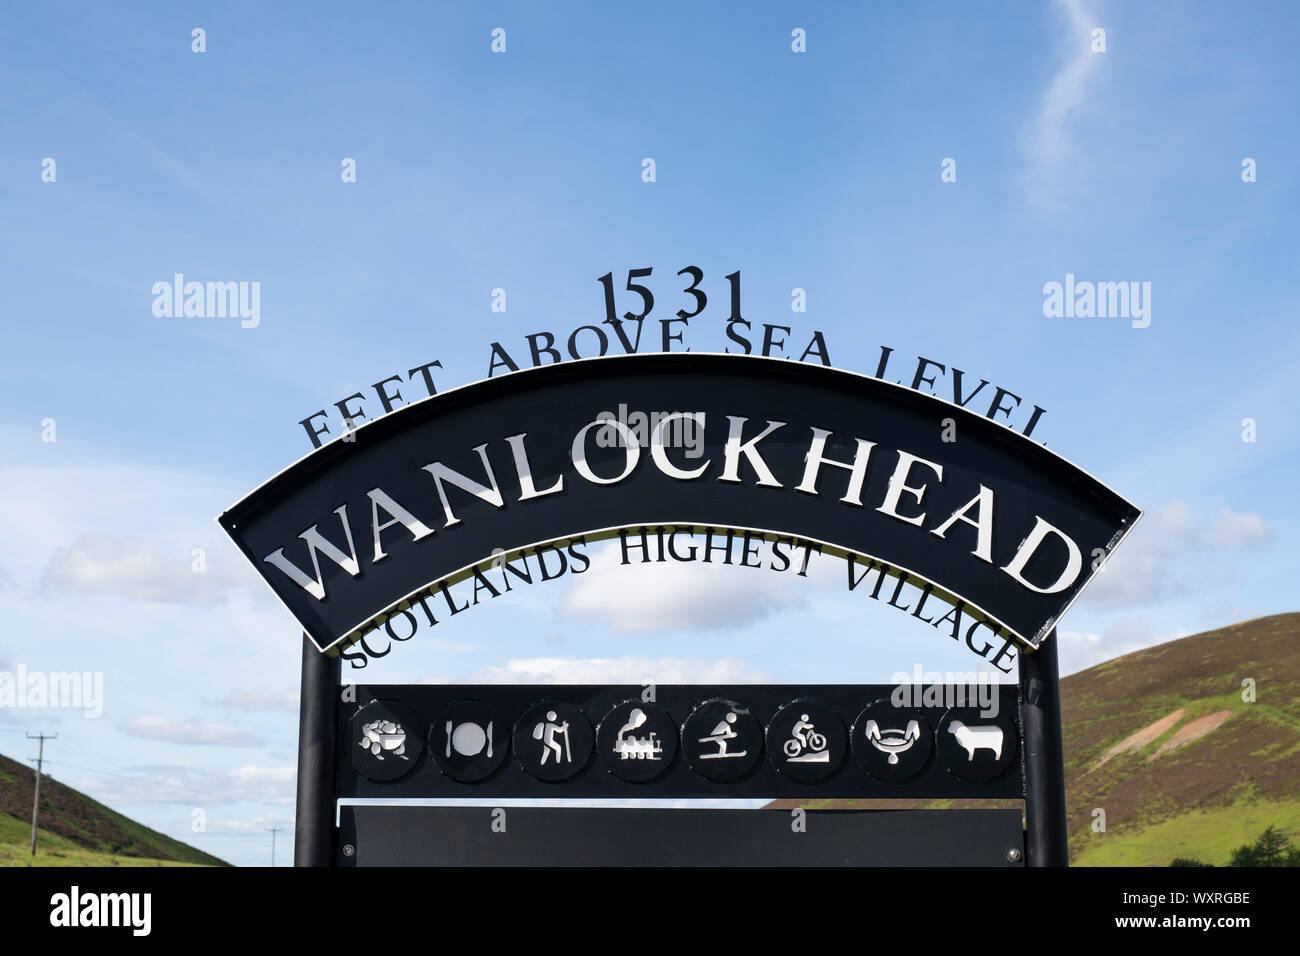 Wanlockhead village sign, Scotlands highest village. Dumfries and Galloway, Scottish borders, Scotland Stock Photo